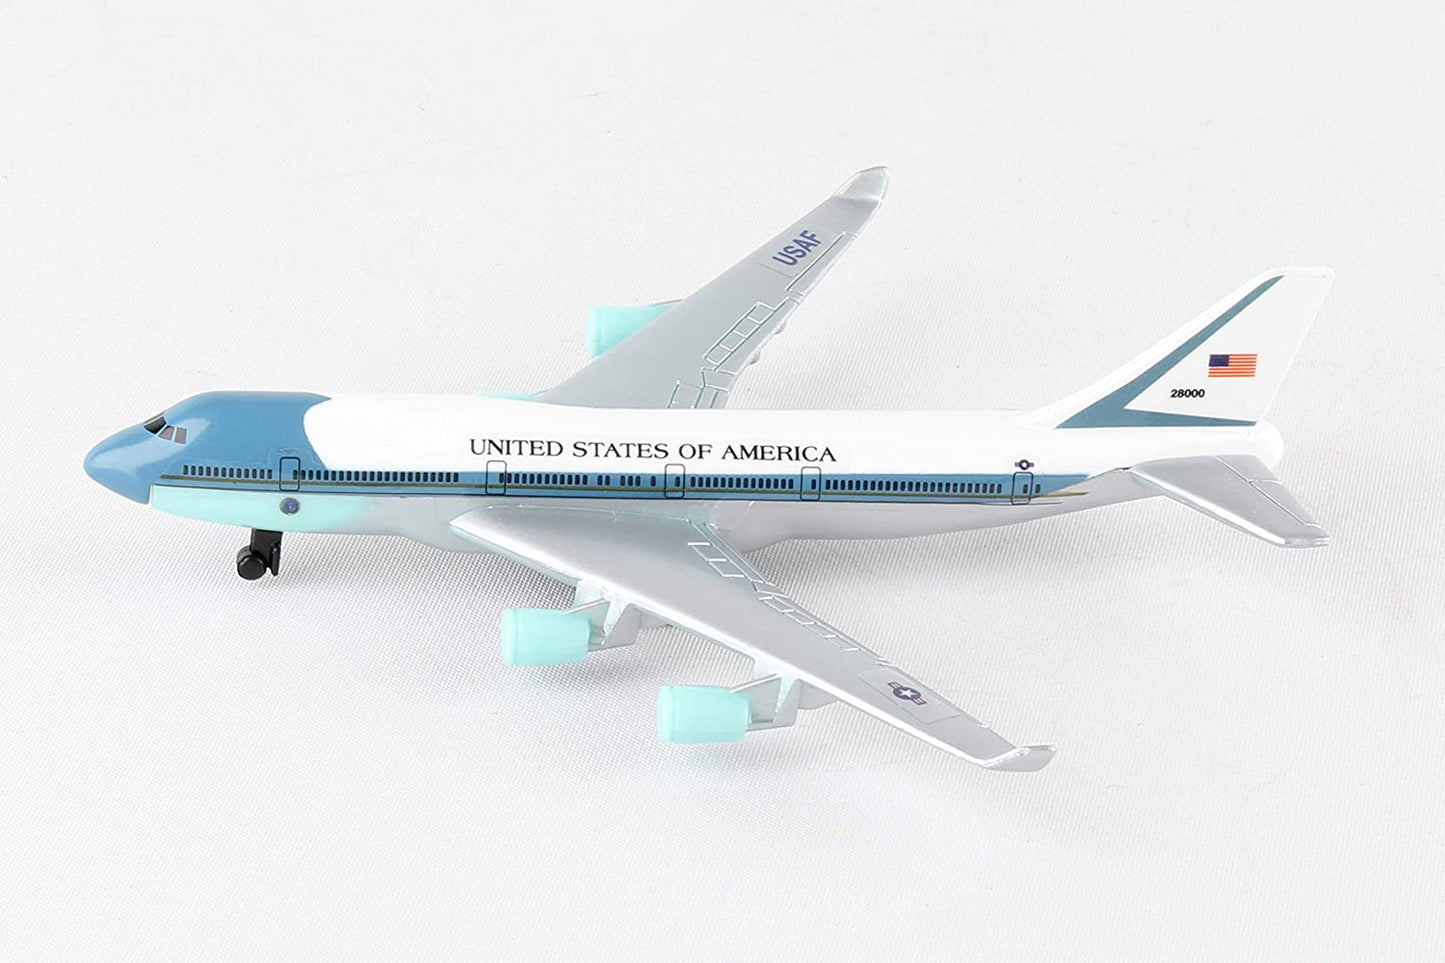 Air Force One, United States Of America Boeing 747 Kids Die cast Airplane Play-Set